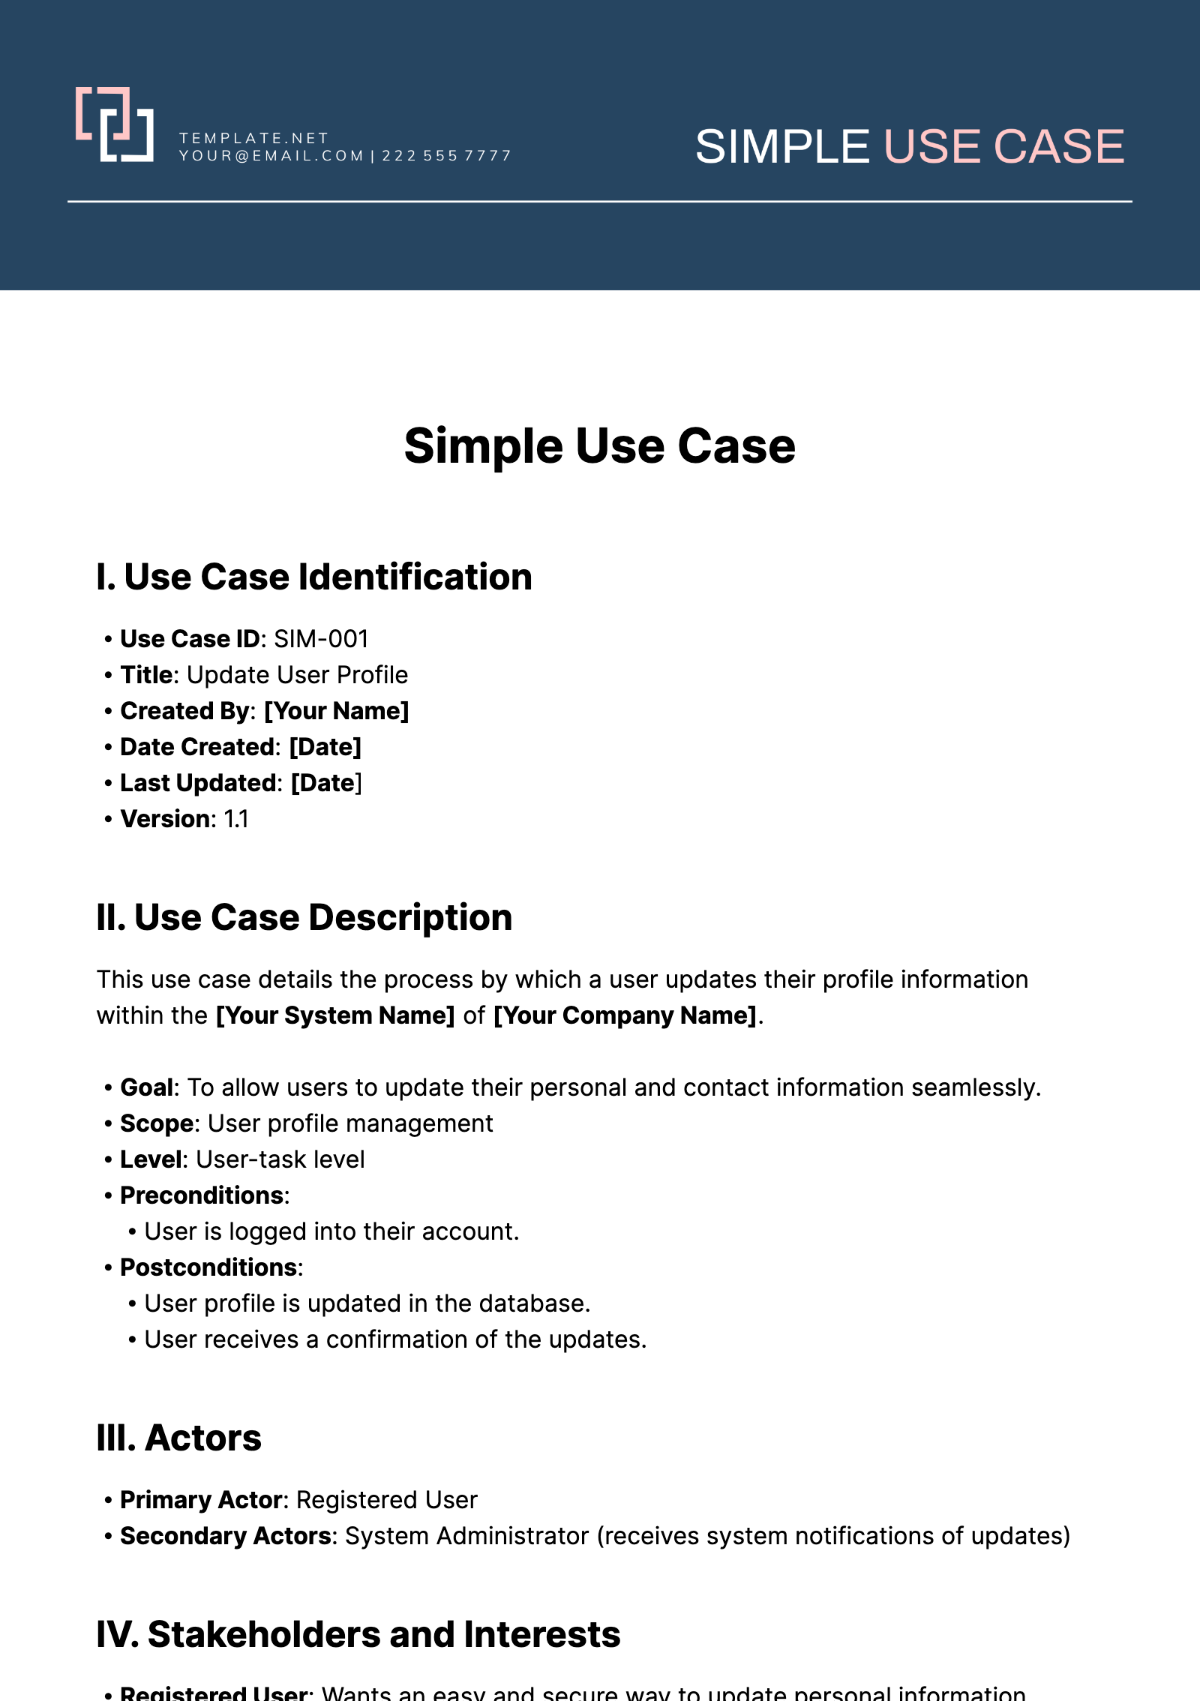 Simple Use Case Template